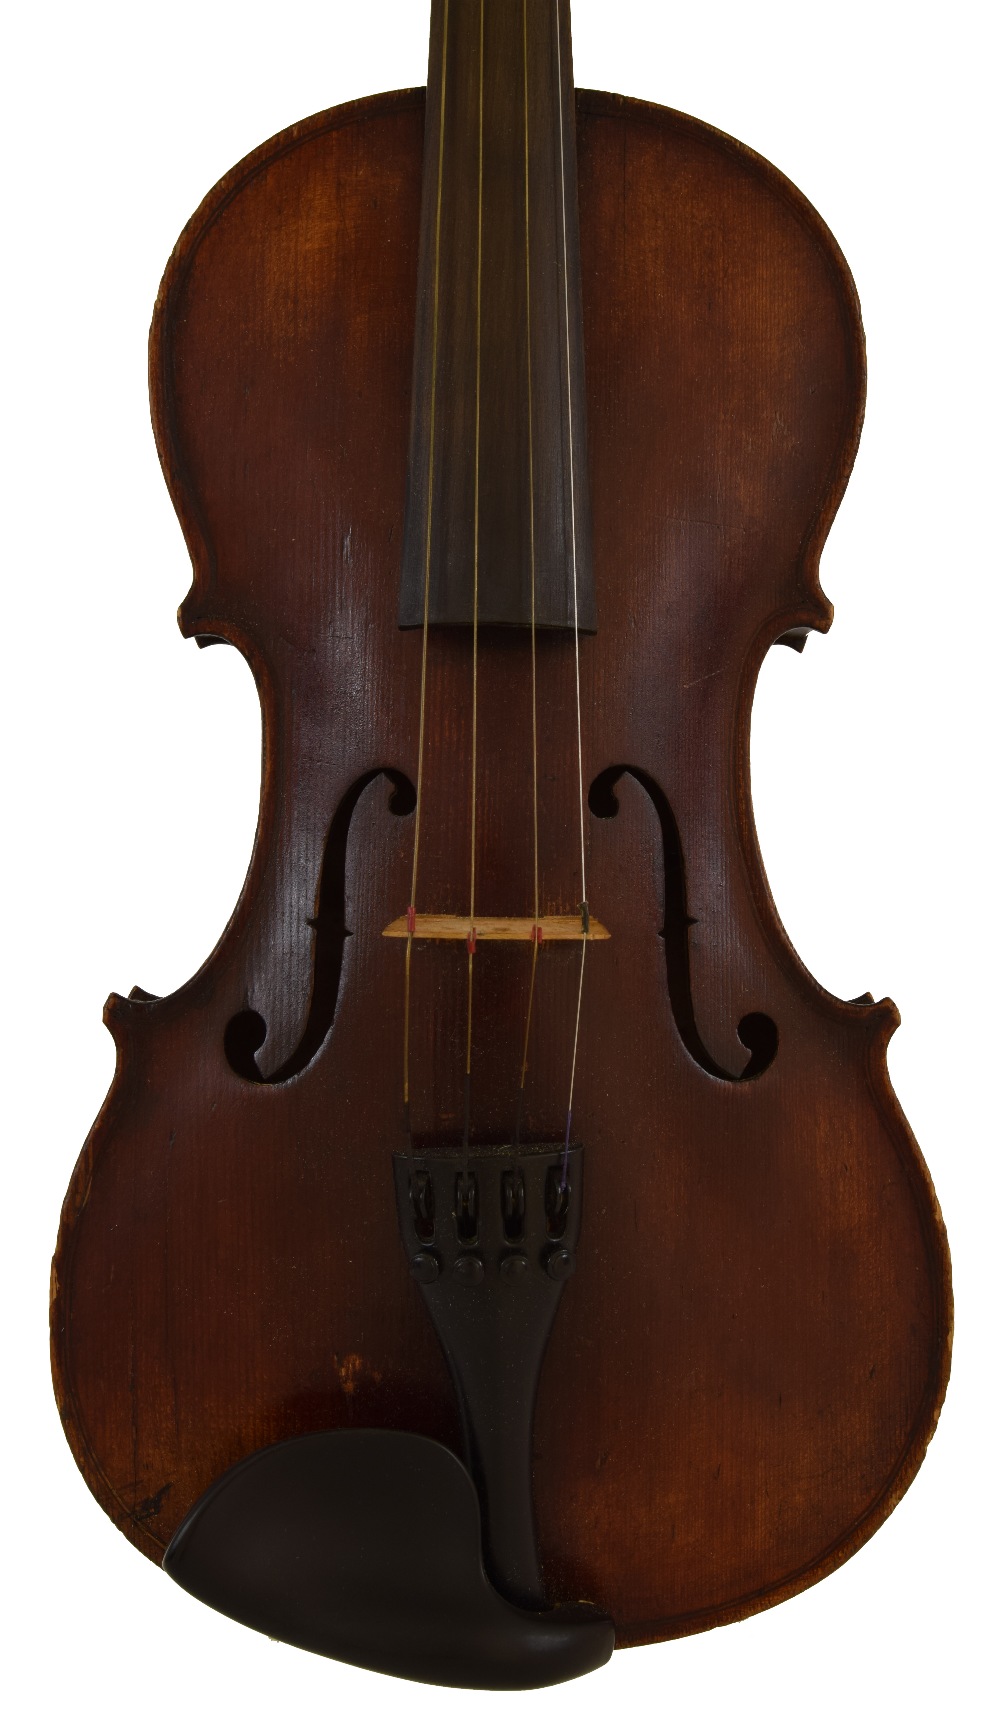 Late 19th century German violin of the Neuner School, 14", 35.60cm